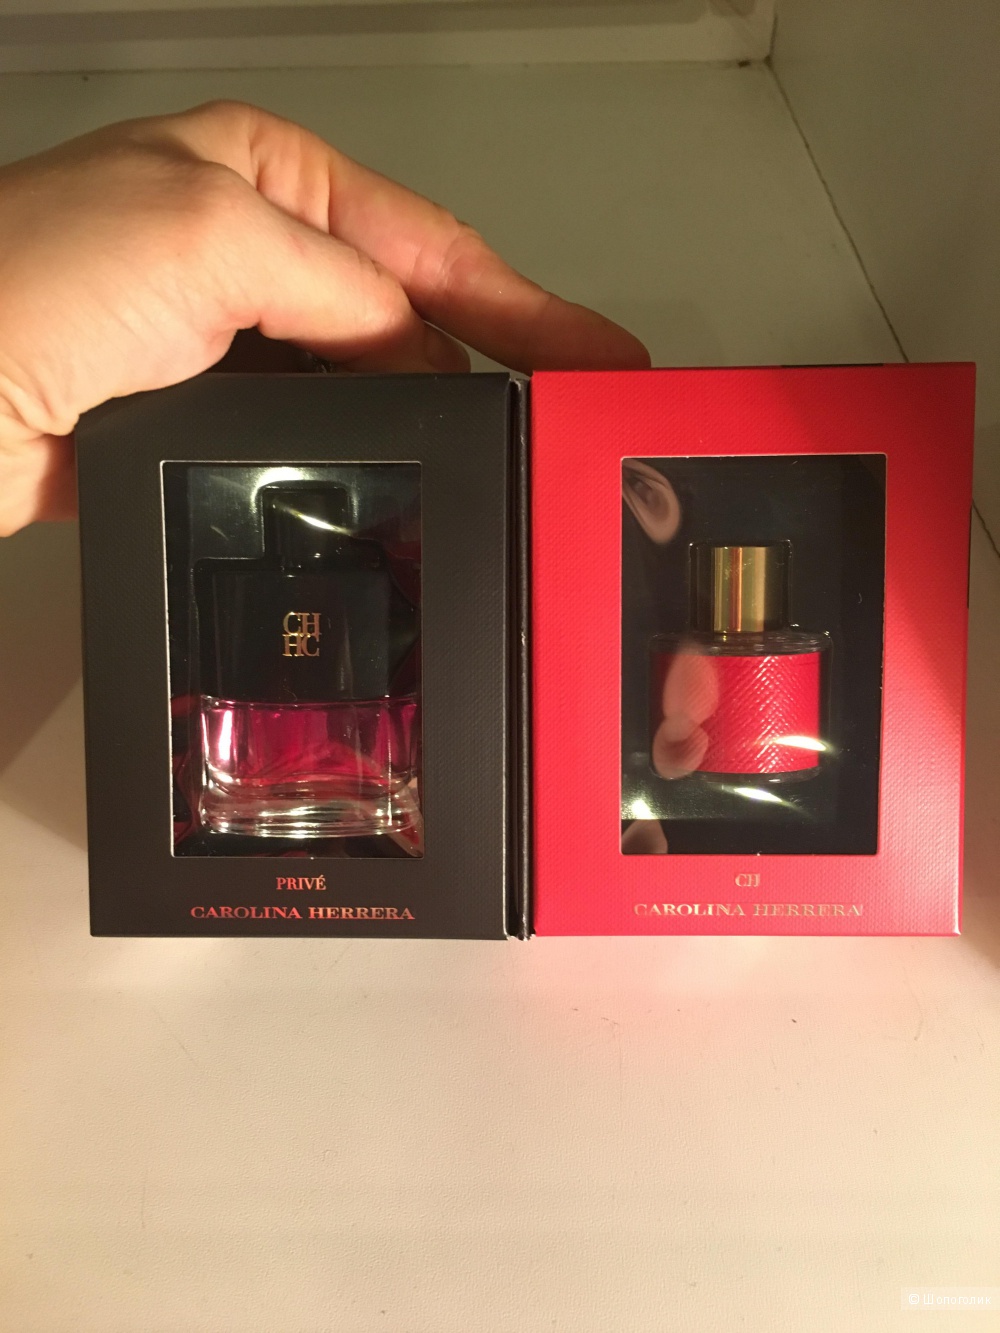 Набор парфюма Carolina Herrera Prive 7ml и Carolina Herrera CH 8ml